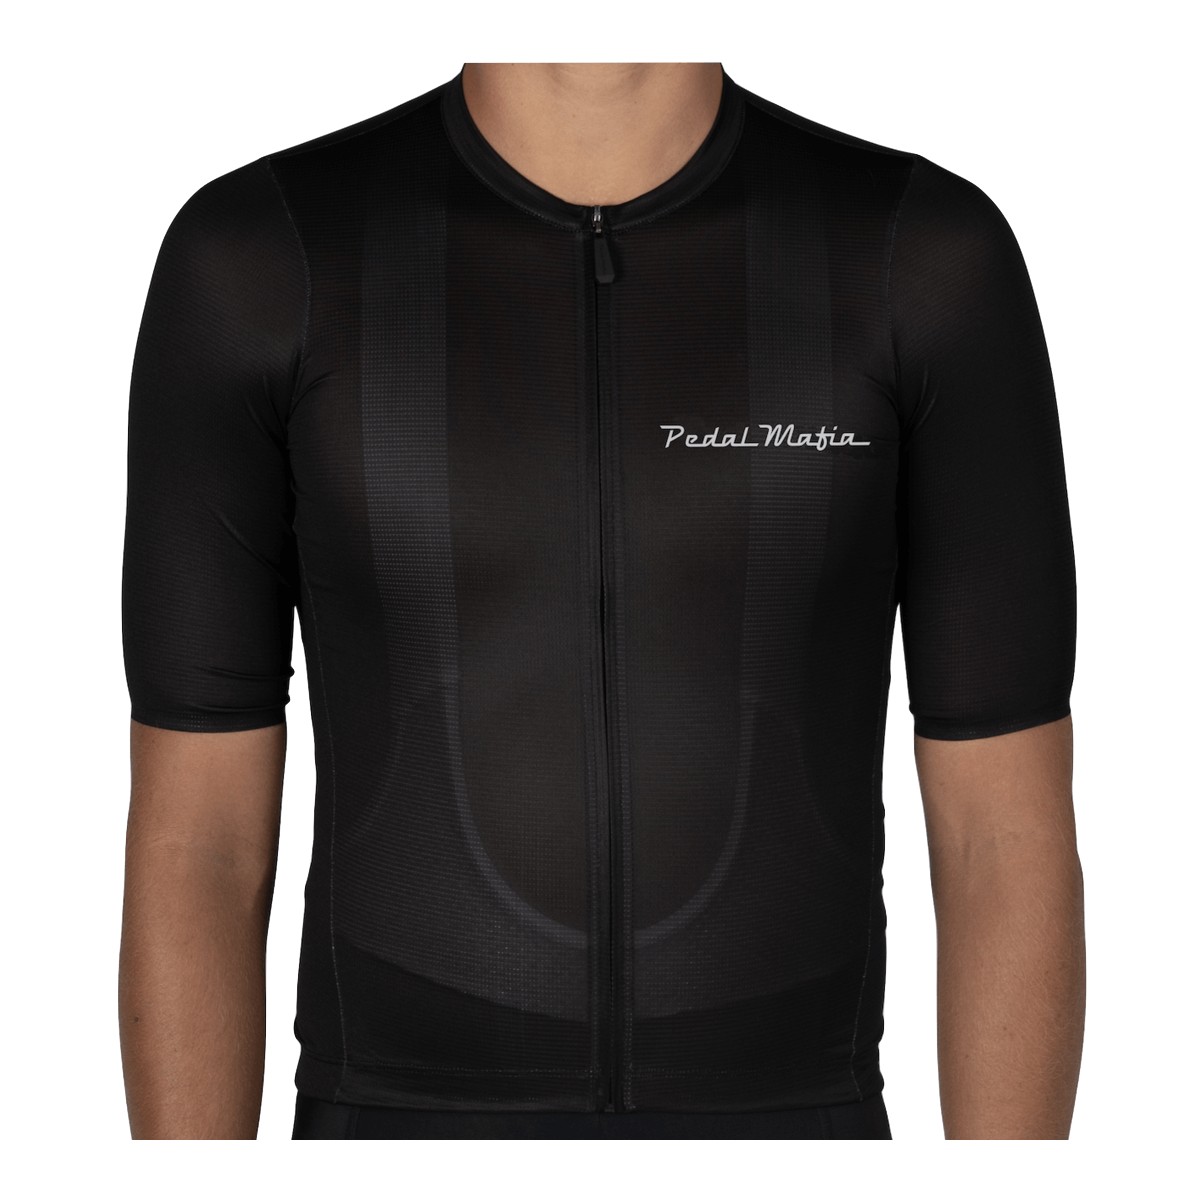 Pedal Mafia - Mafia mens tech black pedal jersey, size s